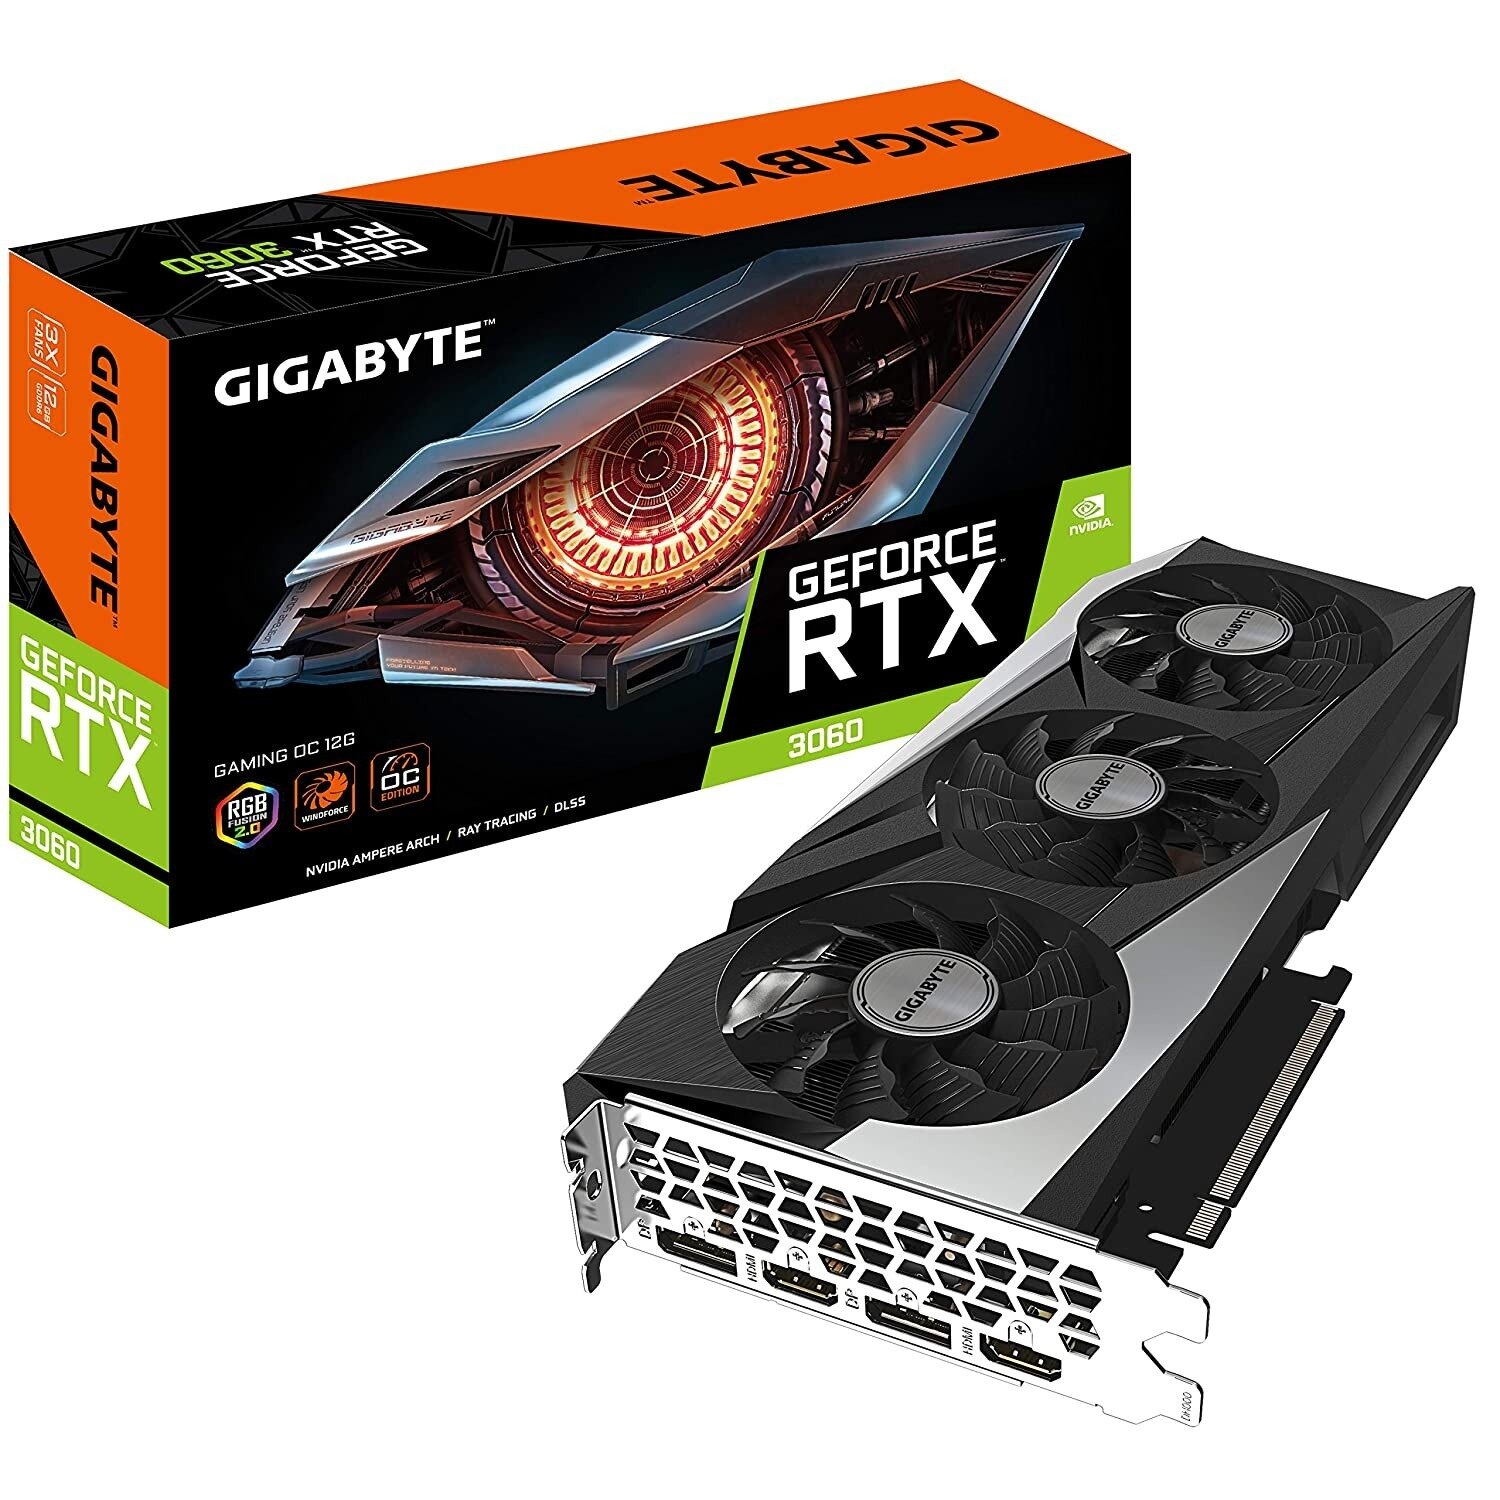 Gigabyte Geforce RTX 3060 Gaming OC 12GB Graphic Card